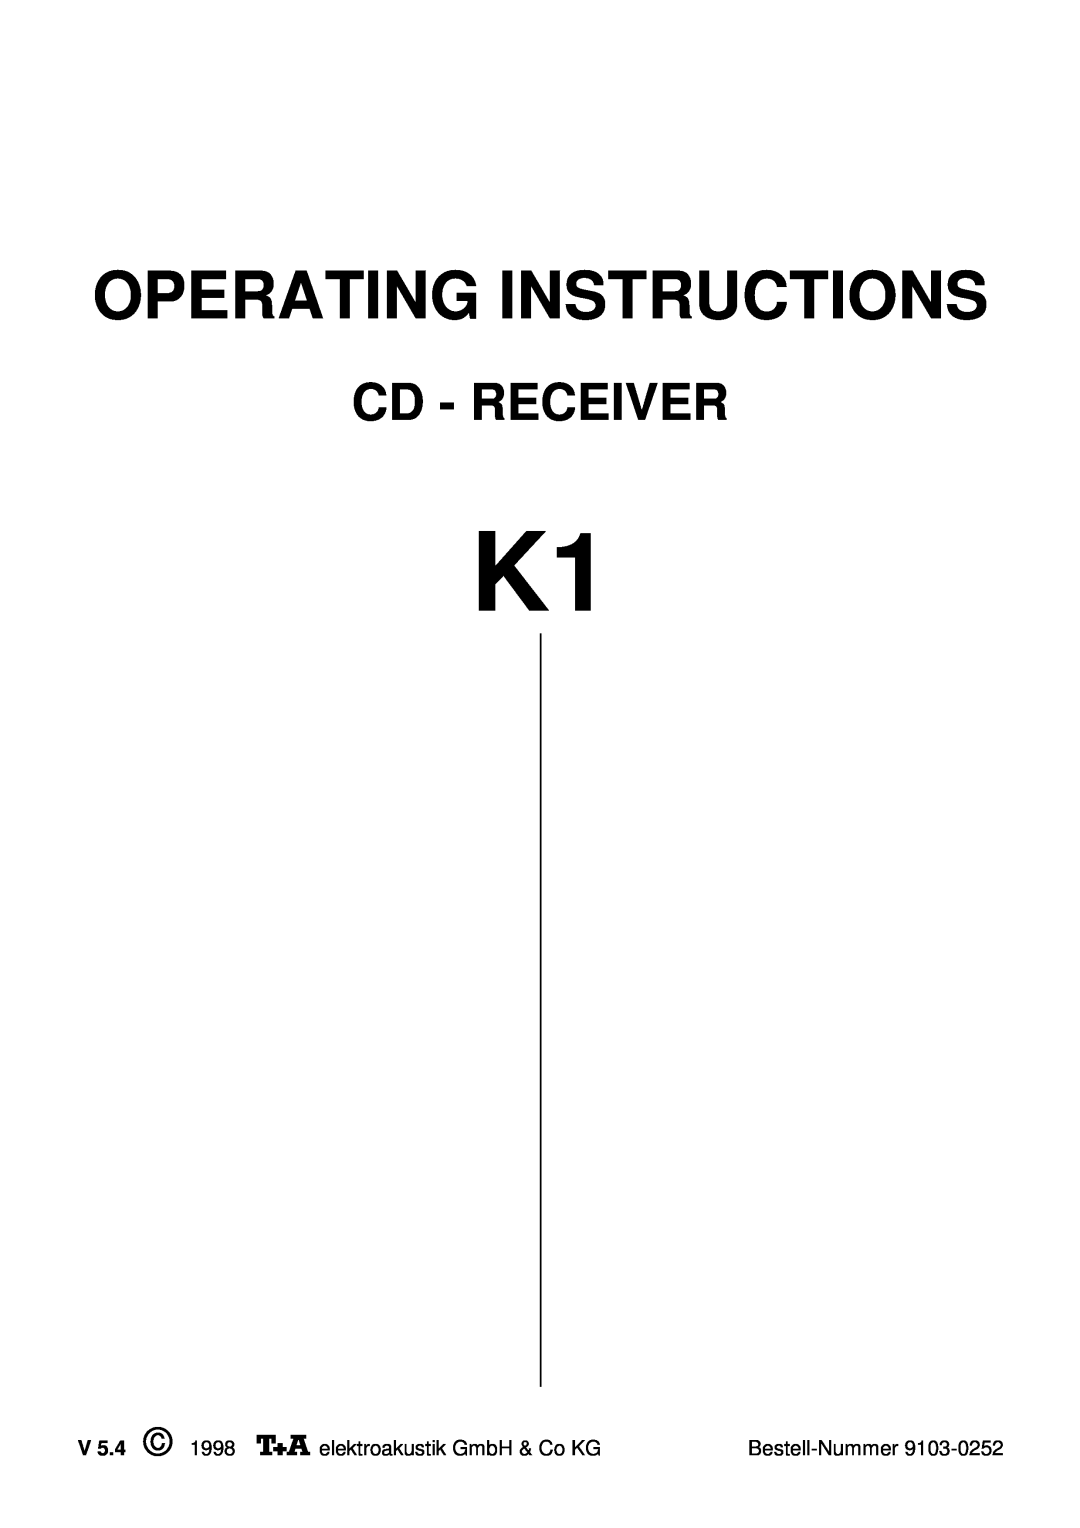 T+A Elektroakustik K1 CD-RECEIVER operating instructions Operating Instructions, Cd - Receiver, Bestell-Nummer 